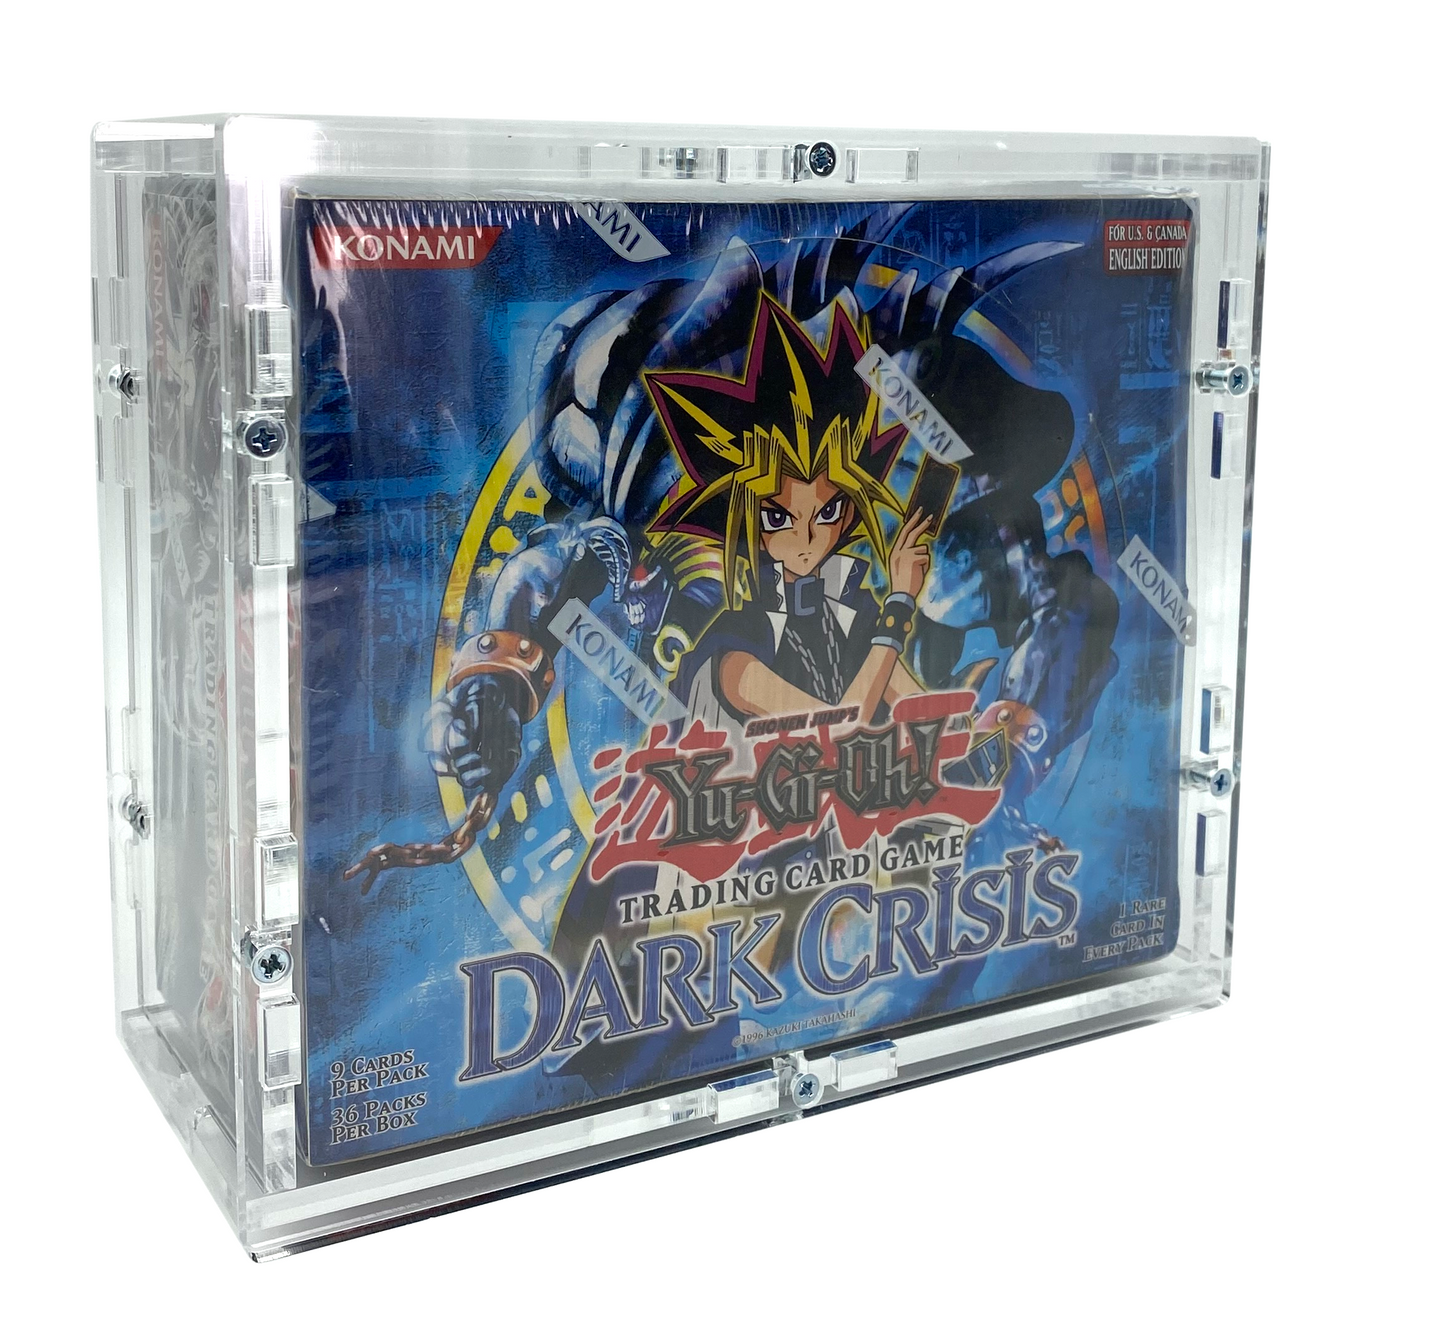 Acryl Case für Yu-Gi-Oh! Yugioh Display 24 Booster a 13 Karten (Booster Box)